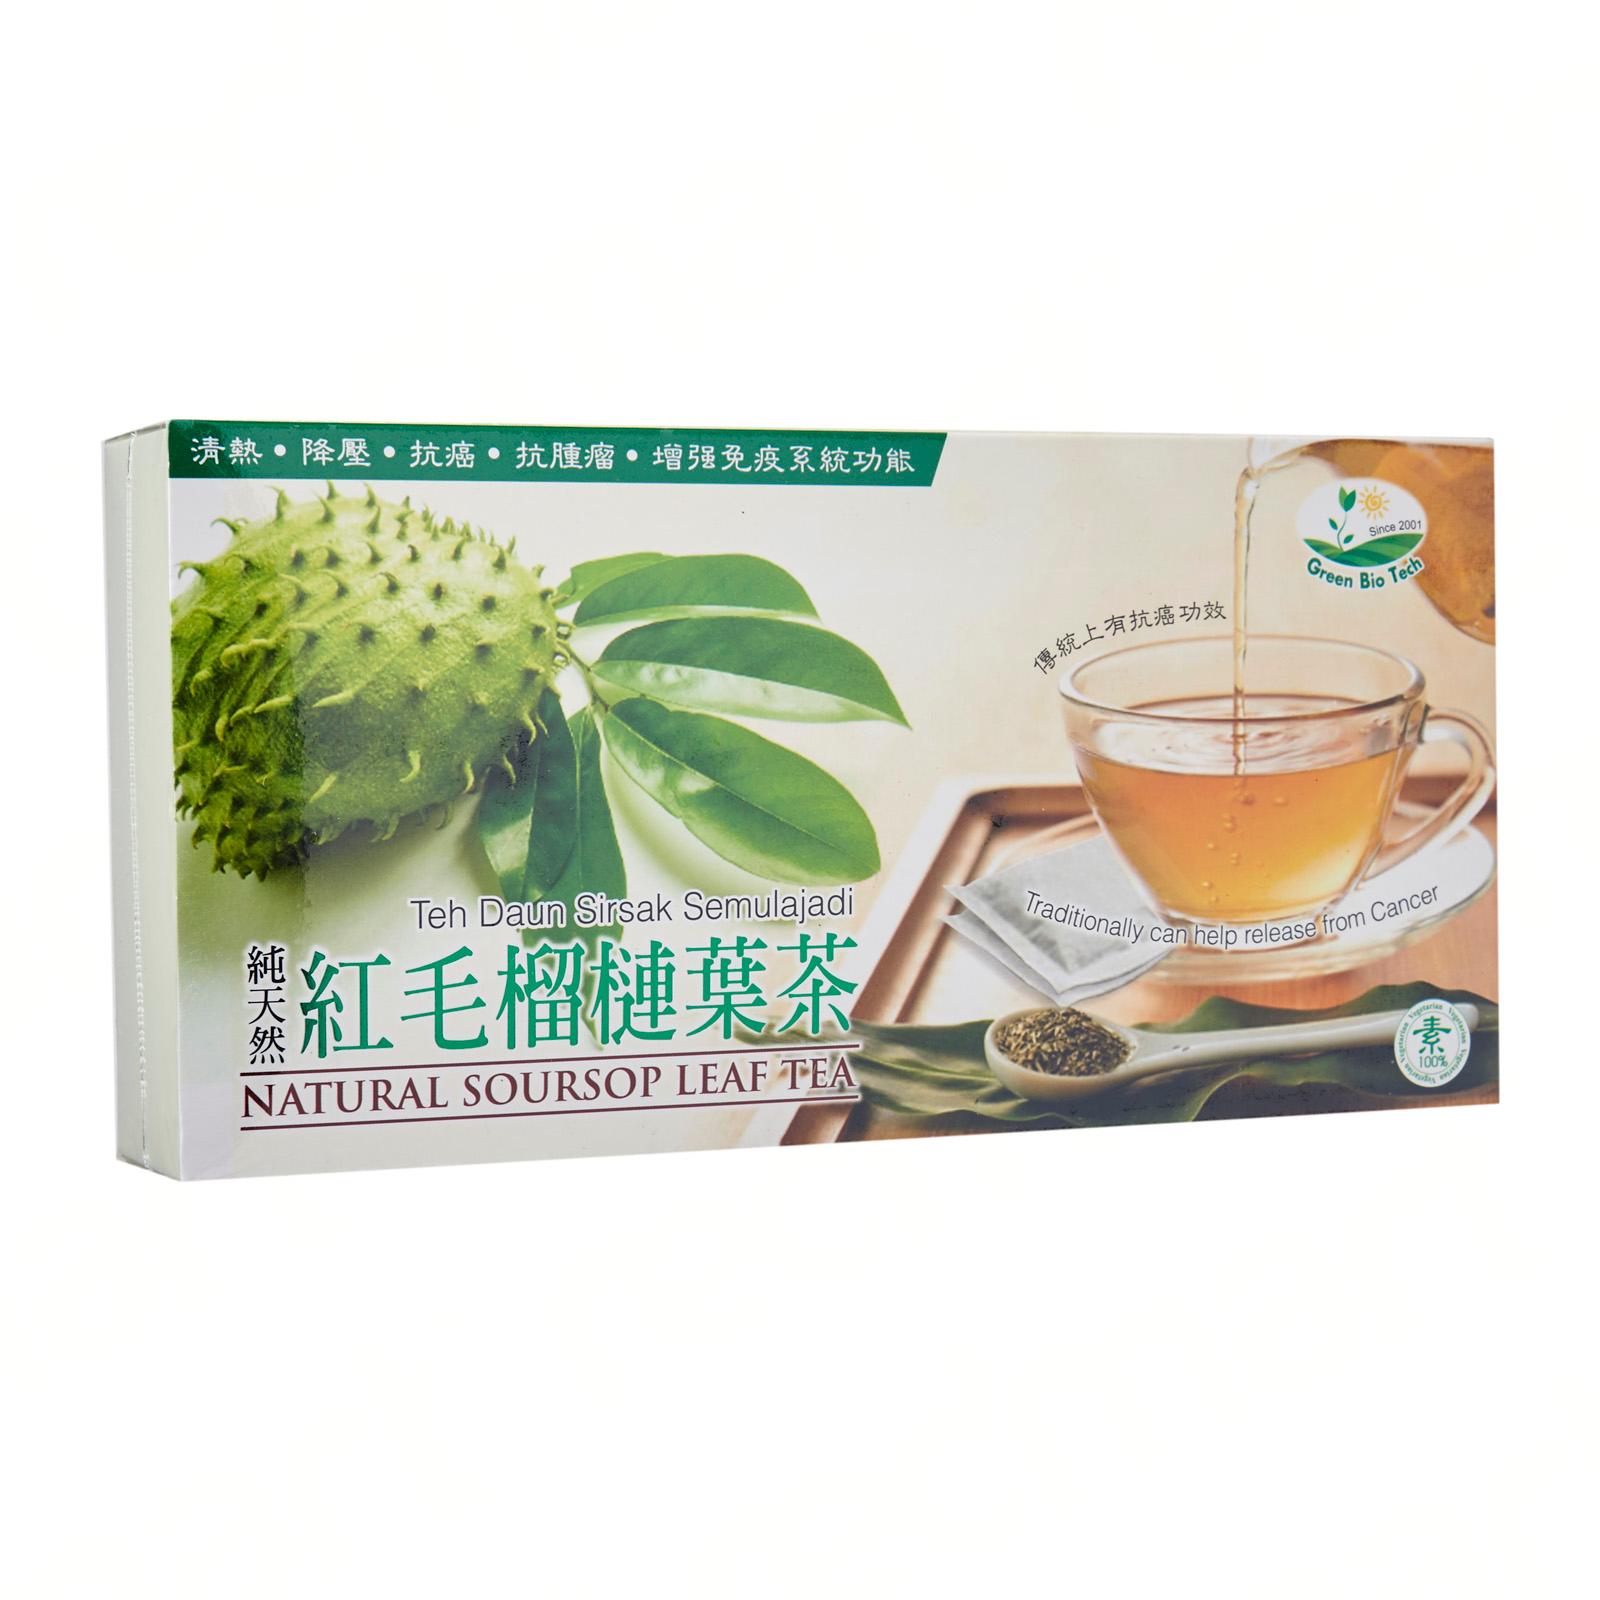 Natural Soursop Leaf Tea (2g x 20teabags)